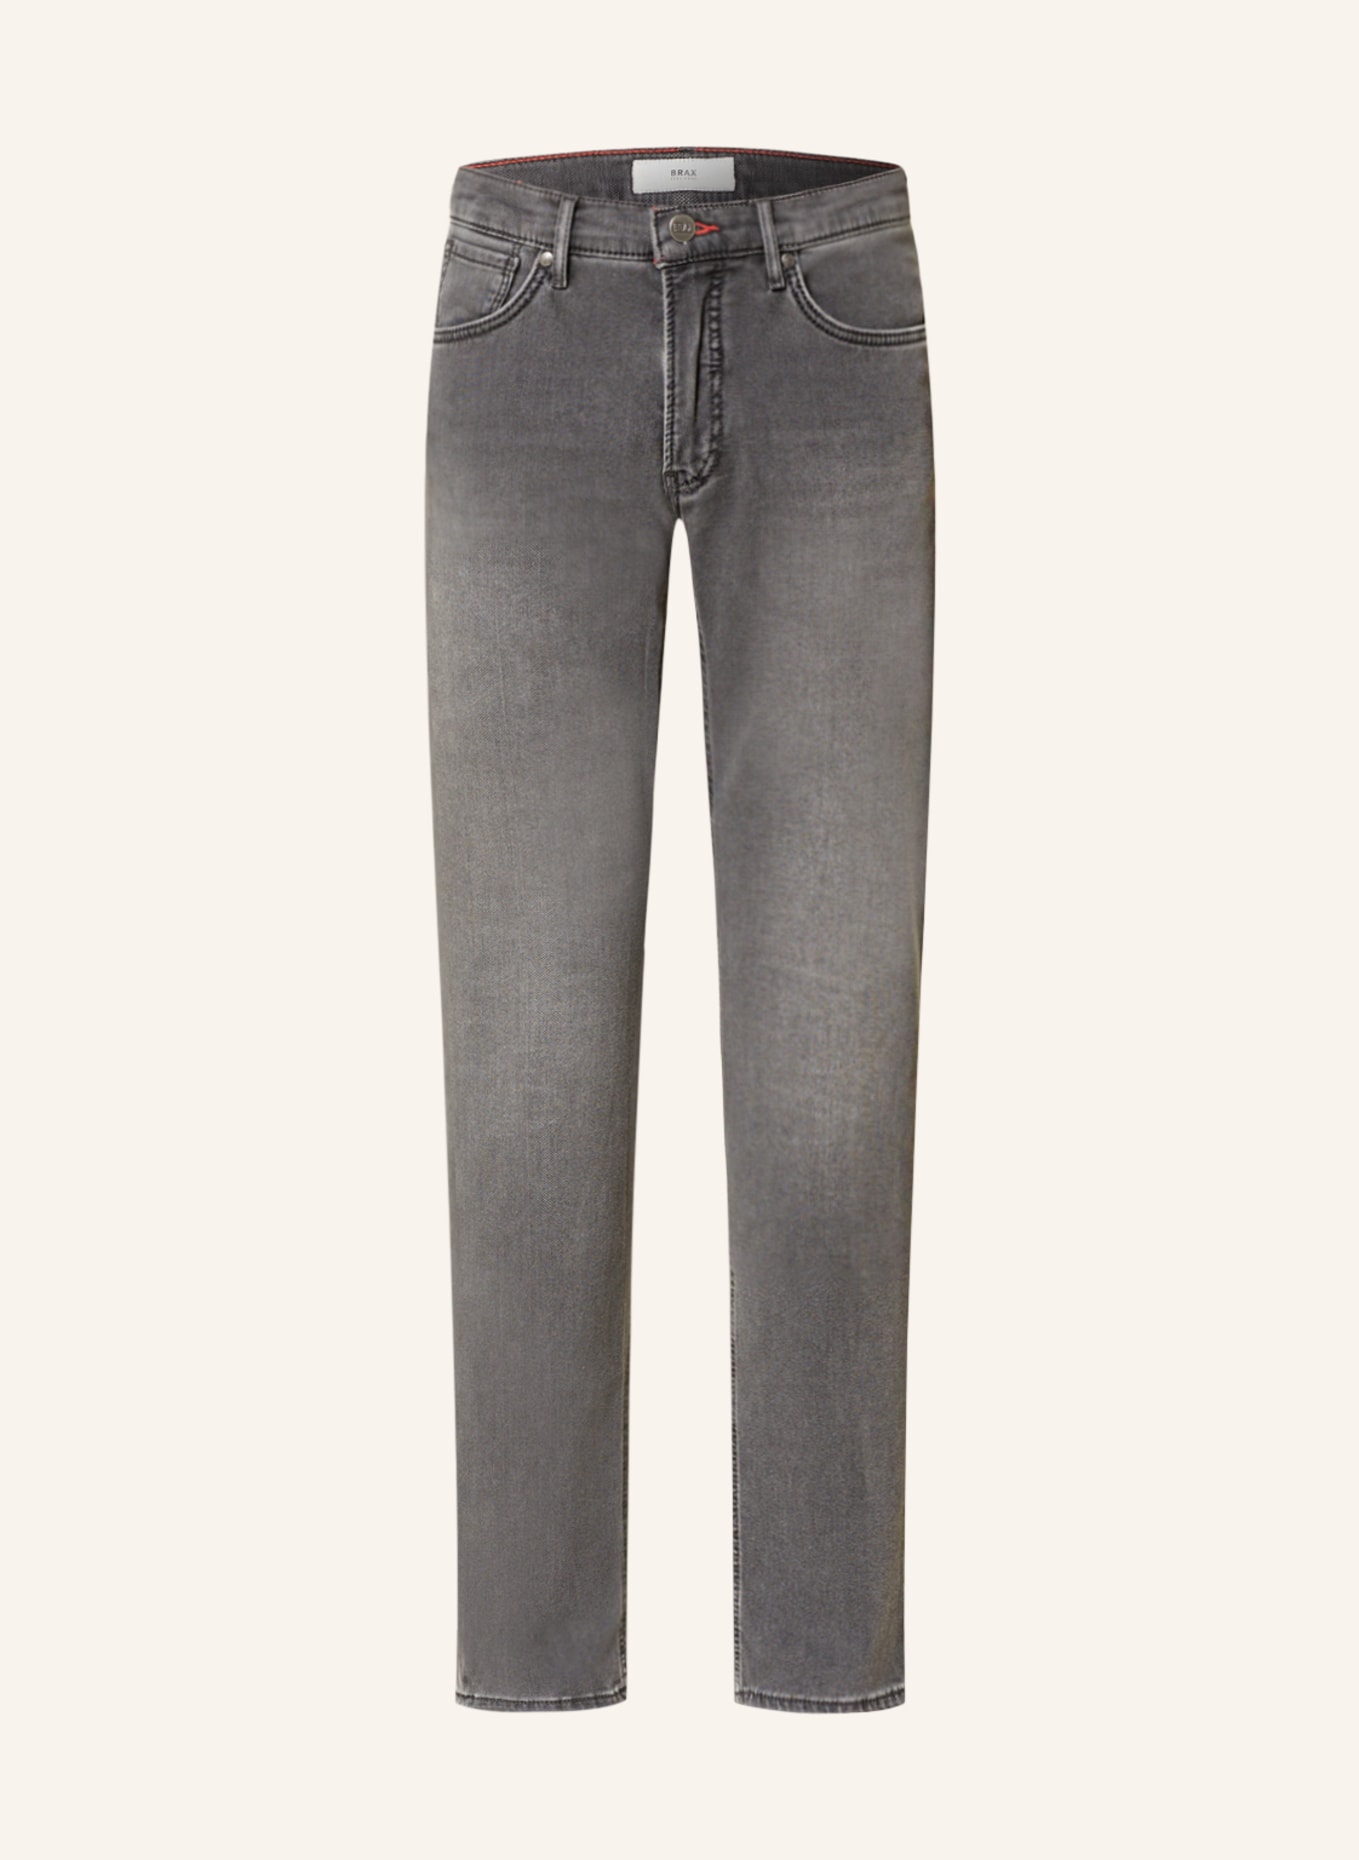 used Fit 05 grey Modern CHUCK in BRAX slate Jeans